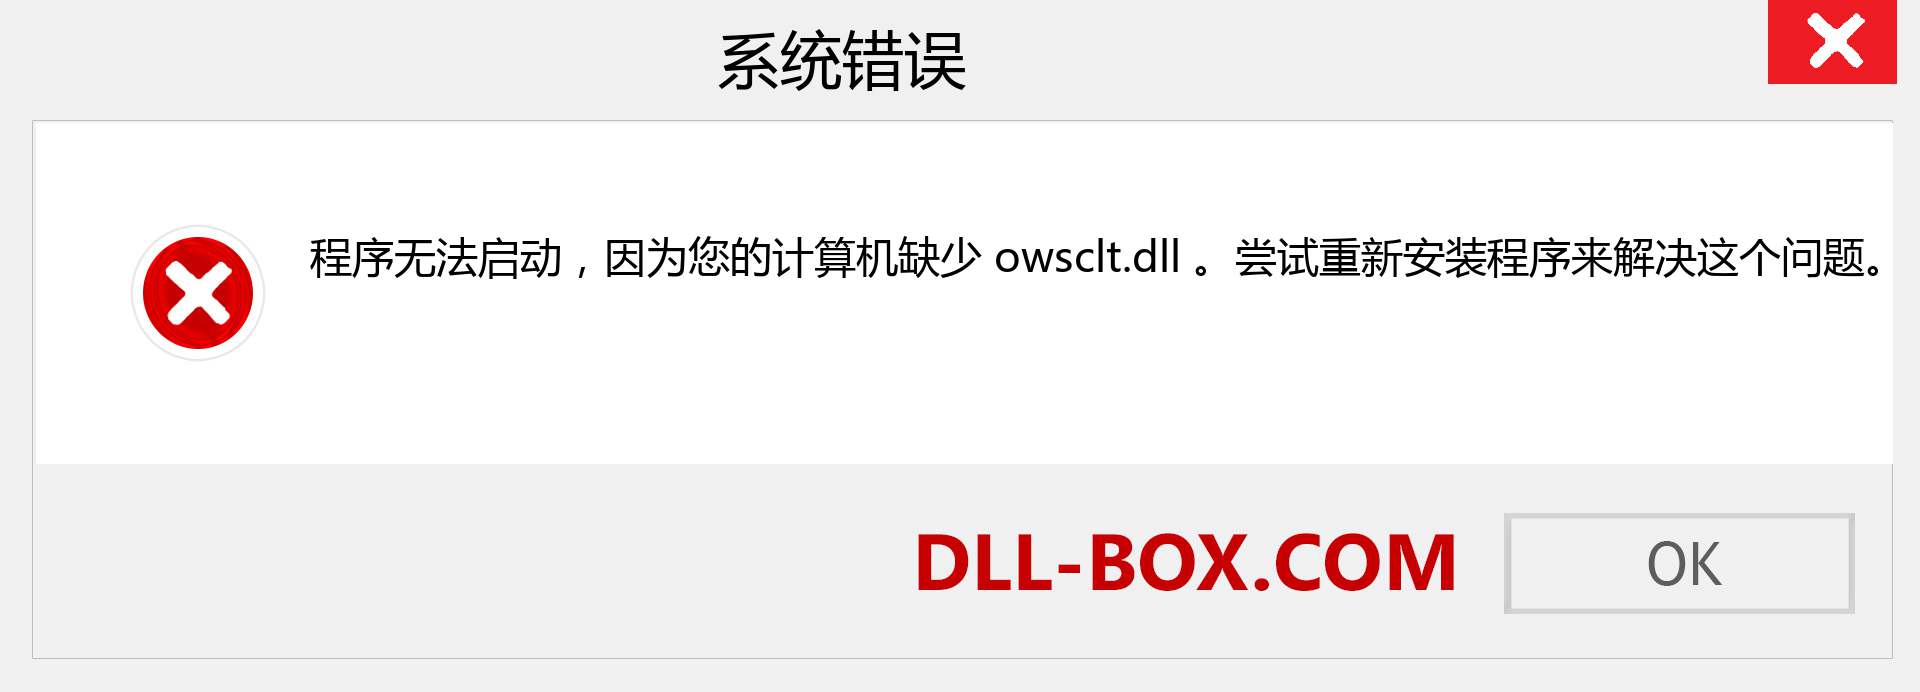 owsclt.dll 文件丢失？。 适用于 Windows 7、8、10 的下载 - 修复 Windows、照片、图像上的 owsclt dll 丢失错误